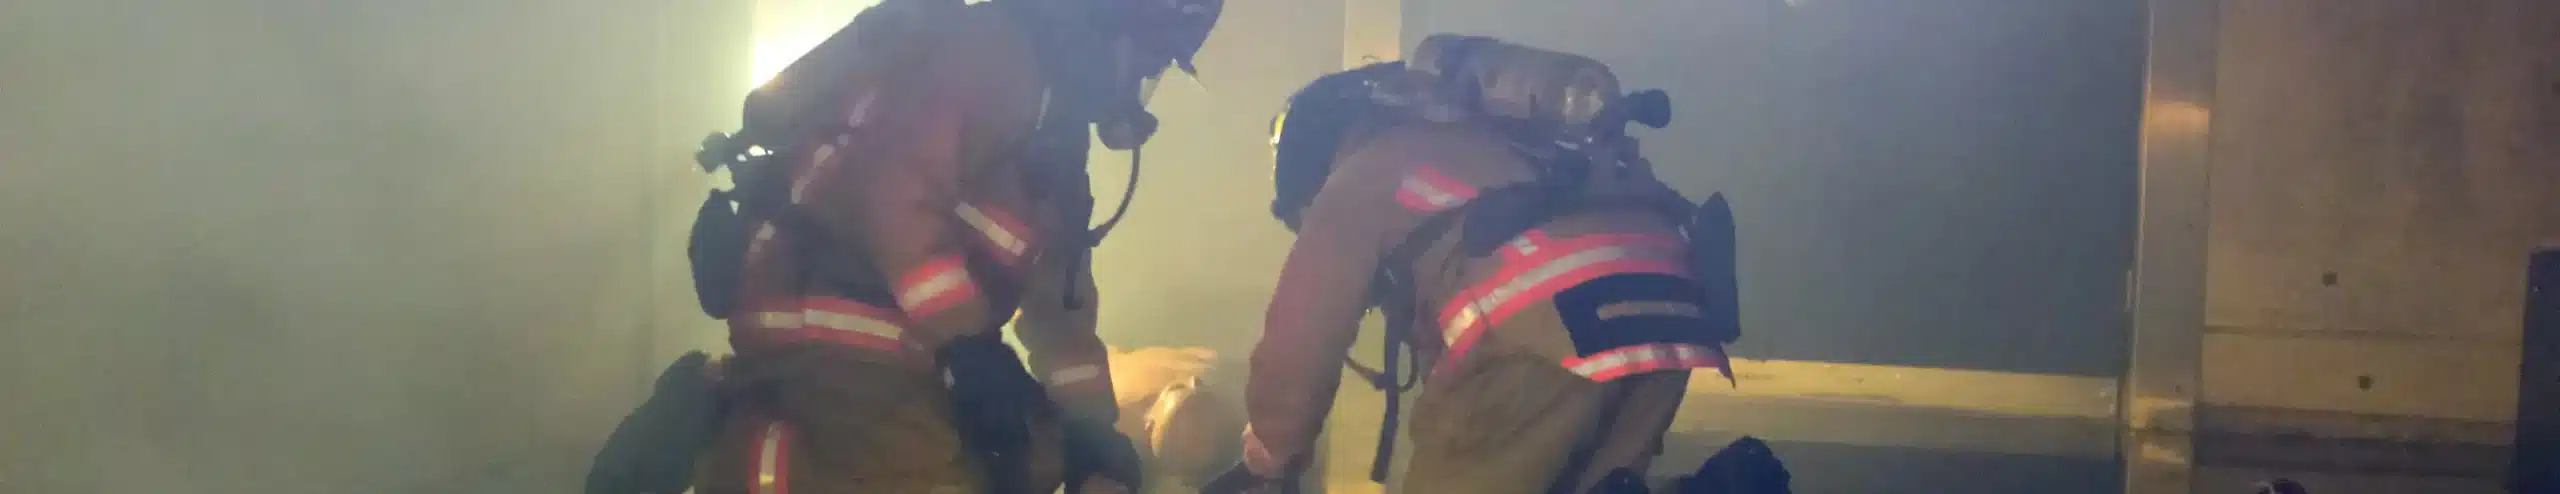 Alachua County Fire Rescue